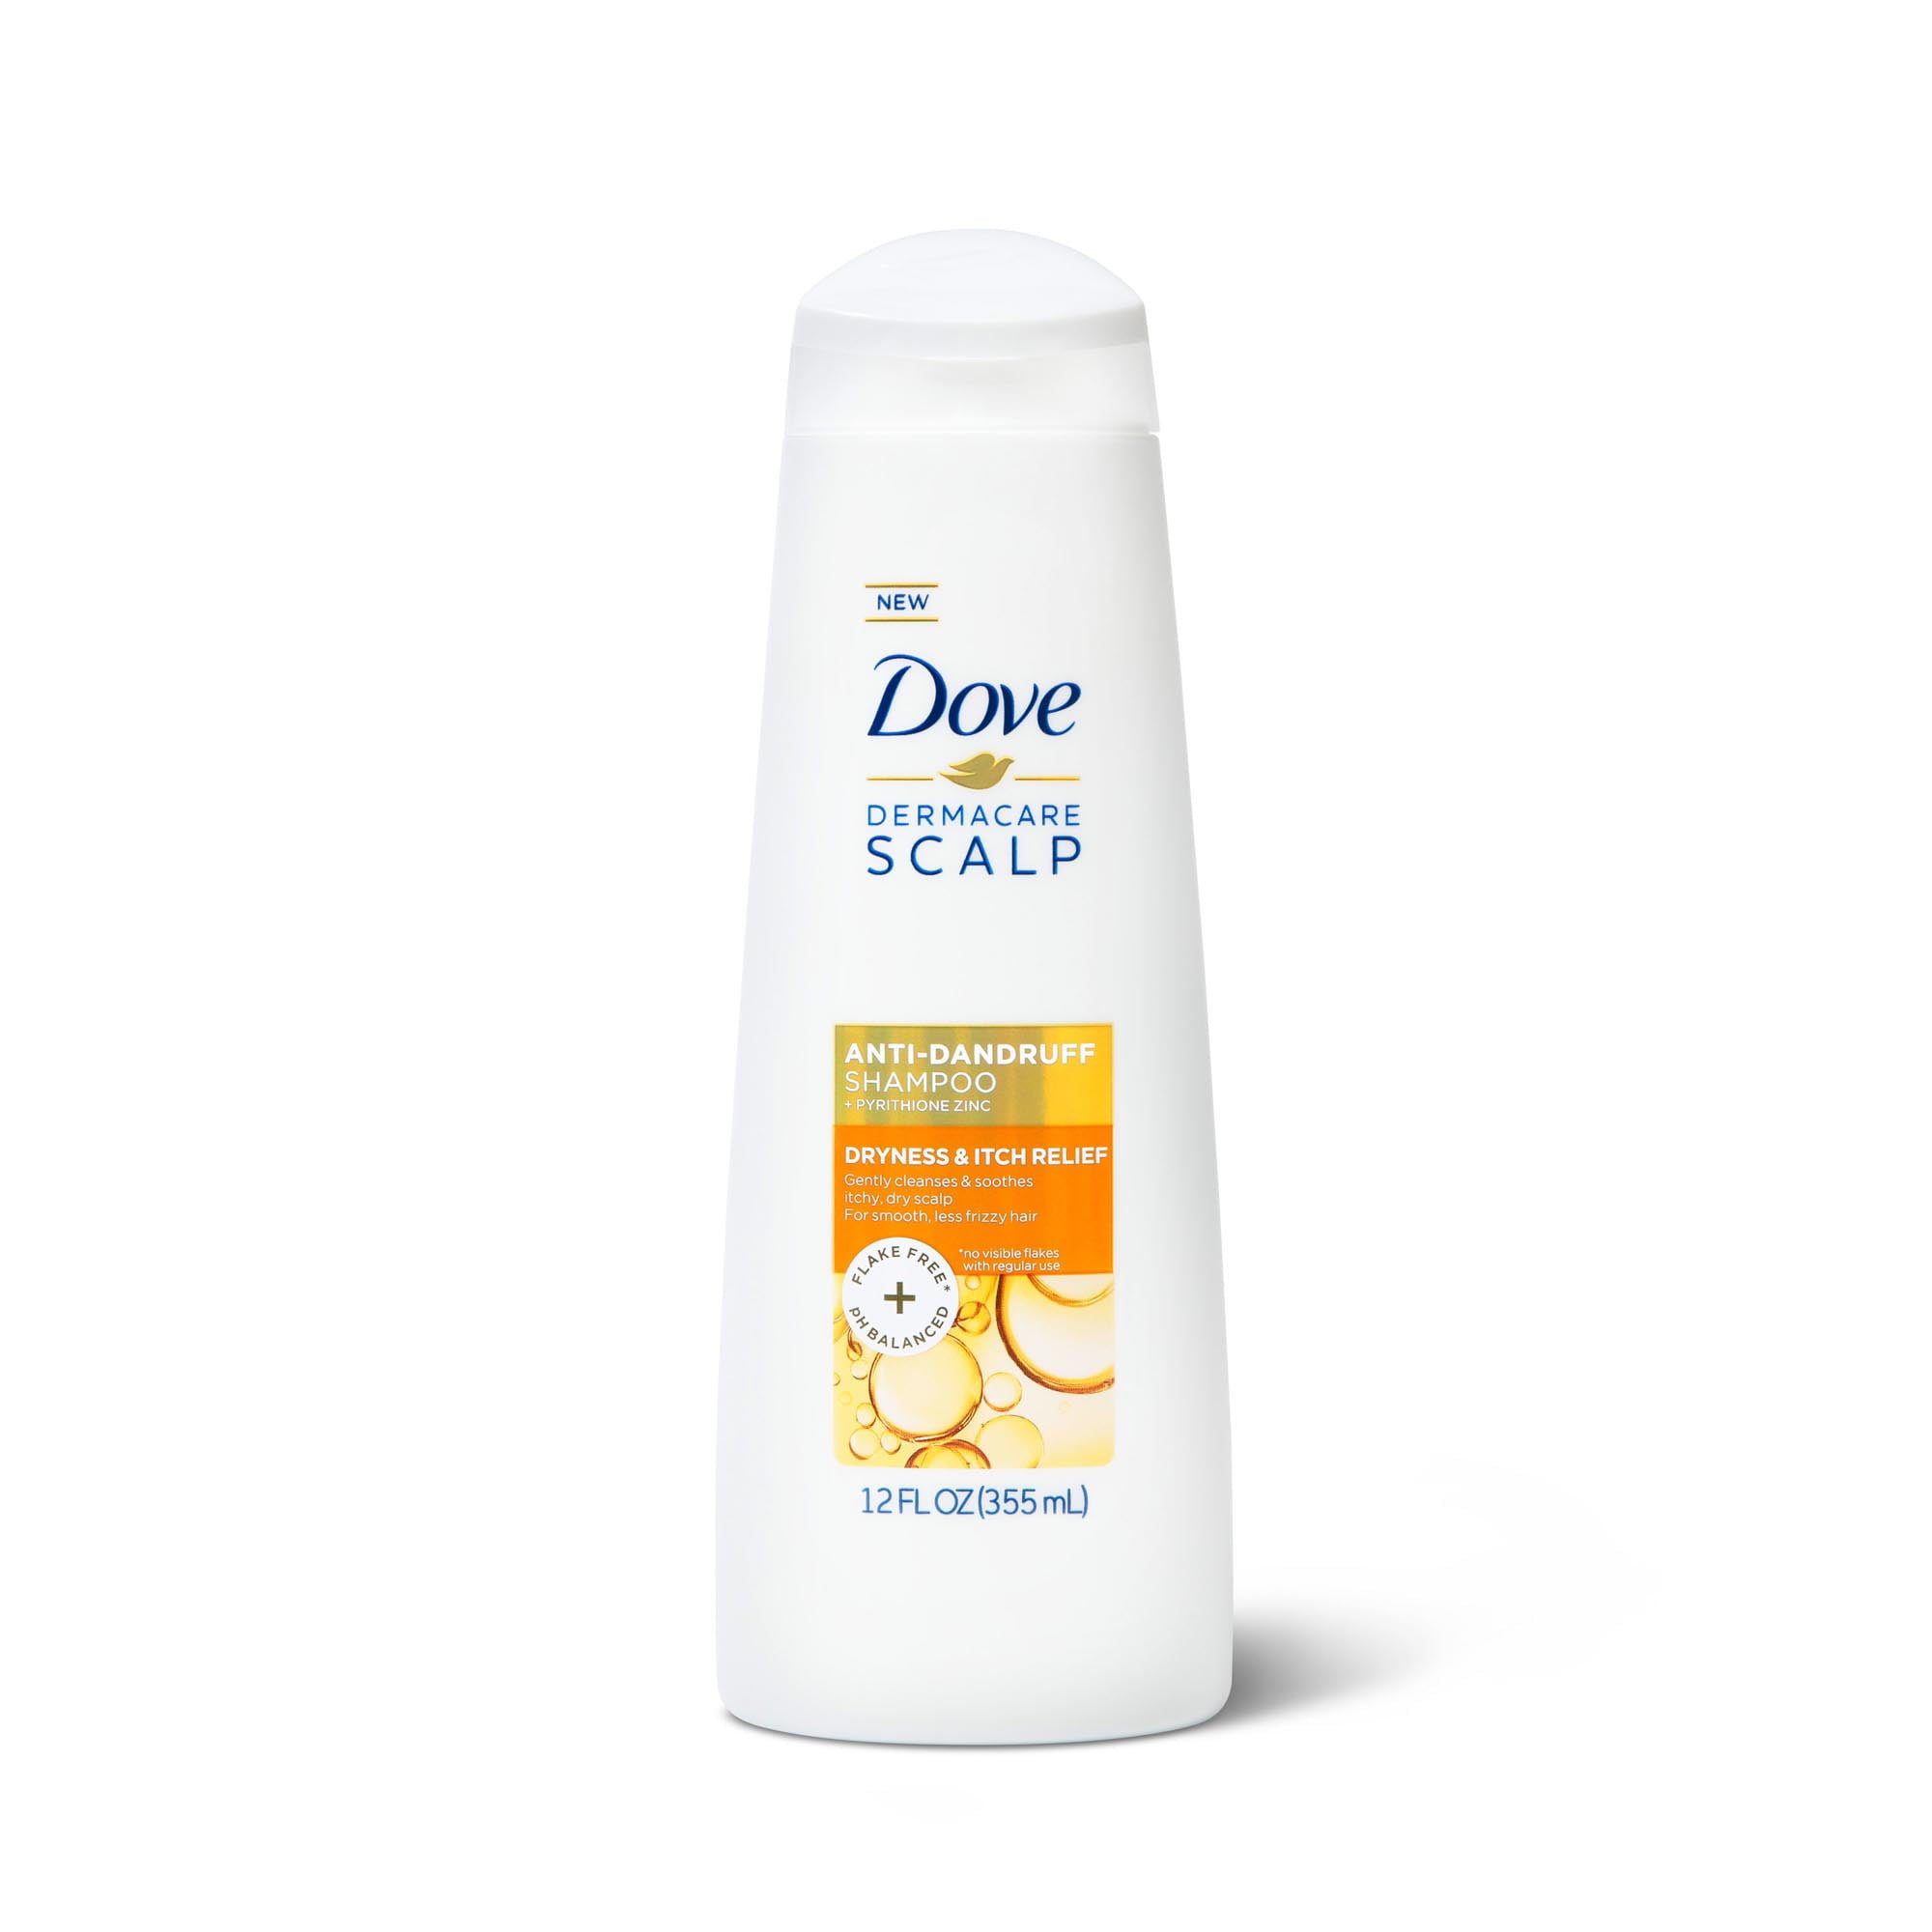 Dove Dermacare Scalp Anti Dandruff Daily Shampoo with Pyrithione Zinc, 12 fl oz | MTTS448